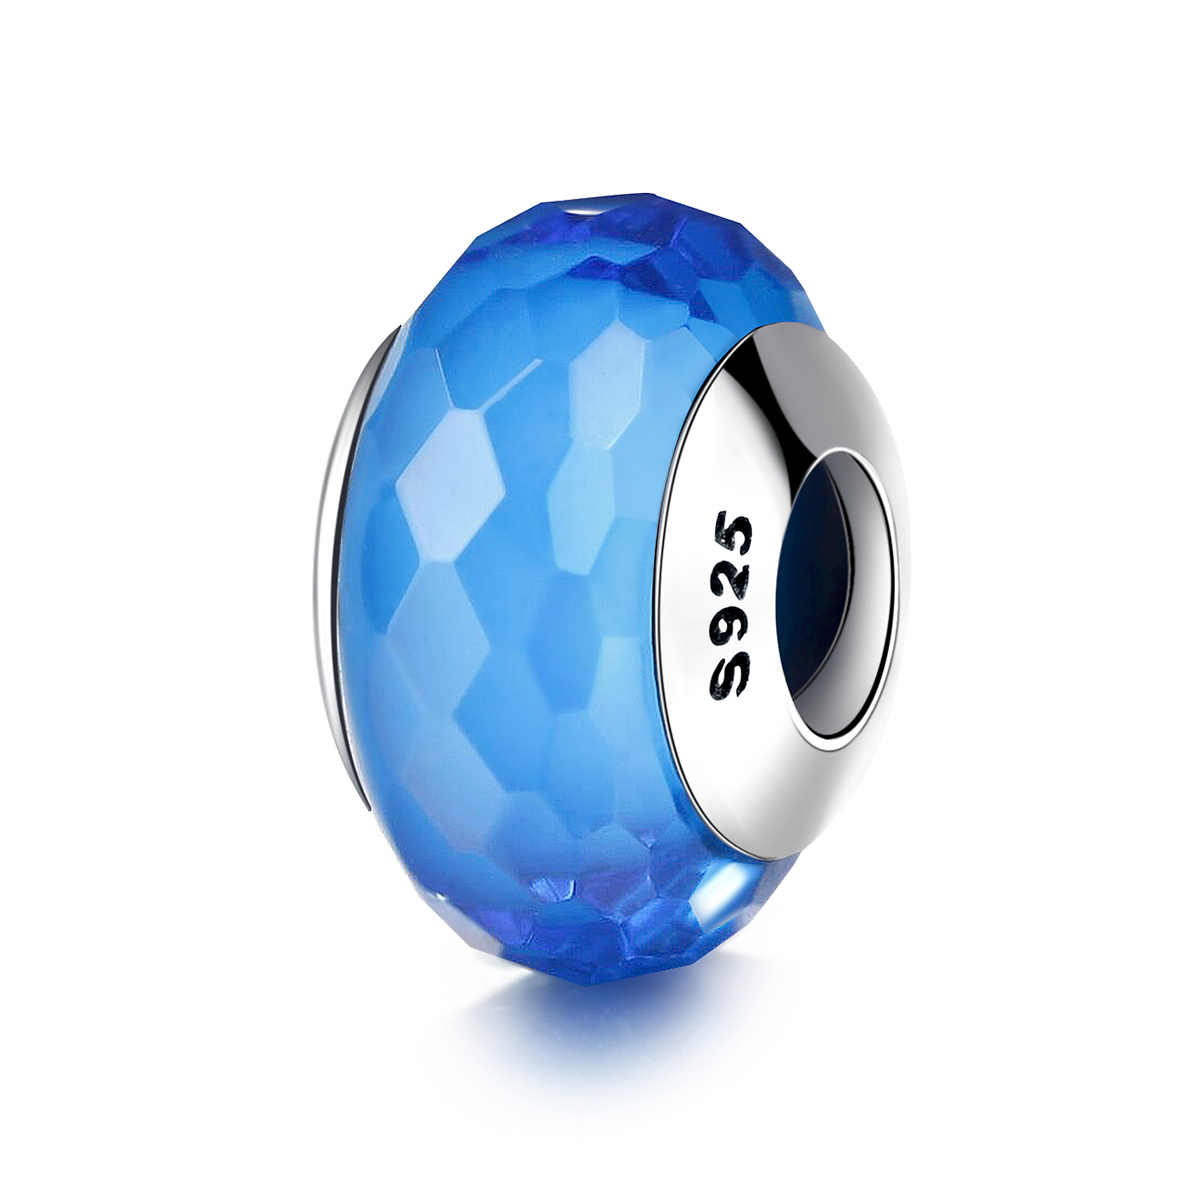 pandora style blue facet murano glass bead charm scz037